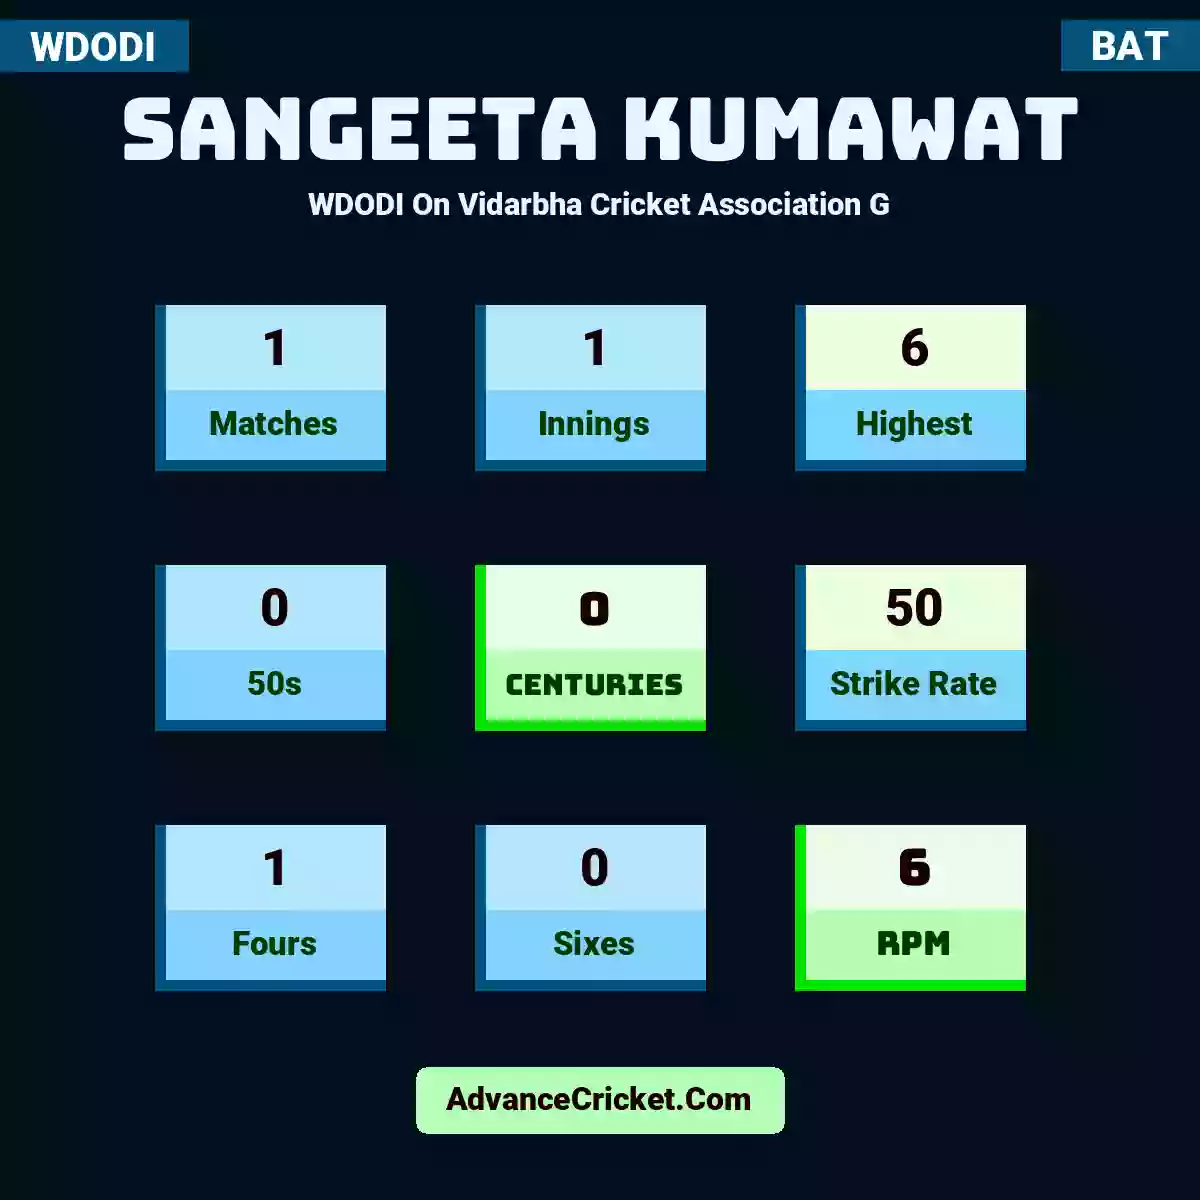 Sangeeta Kumawat WDODI  On Vidarbha Cricket Association G, Sangeeta Kumawat played 1 matches, scored 6 runs as highest, 0 half-centuries, and 0 centuries, with a strike rate of 50. S.Kumawat hit 1 fours and 0 sixes, with an RPM of 6.